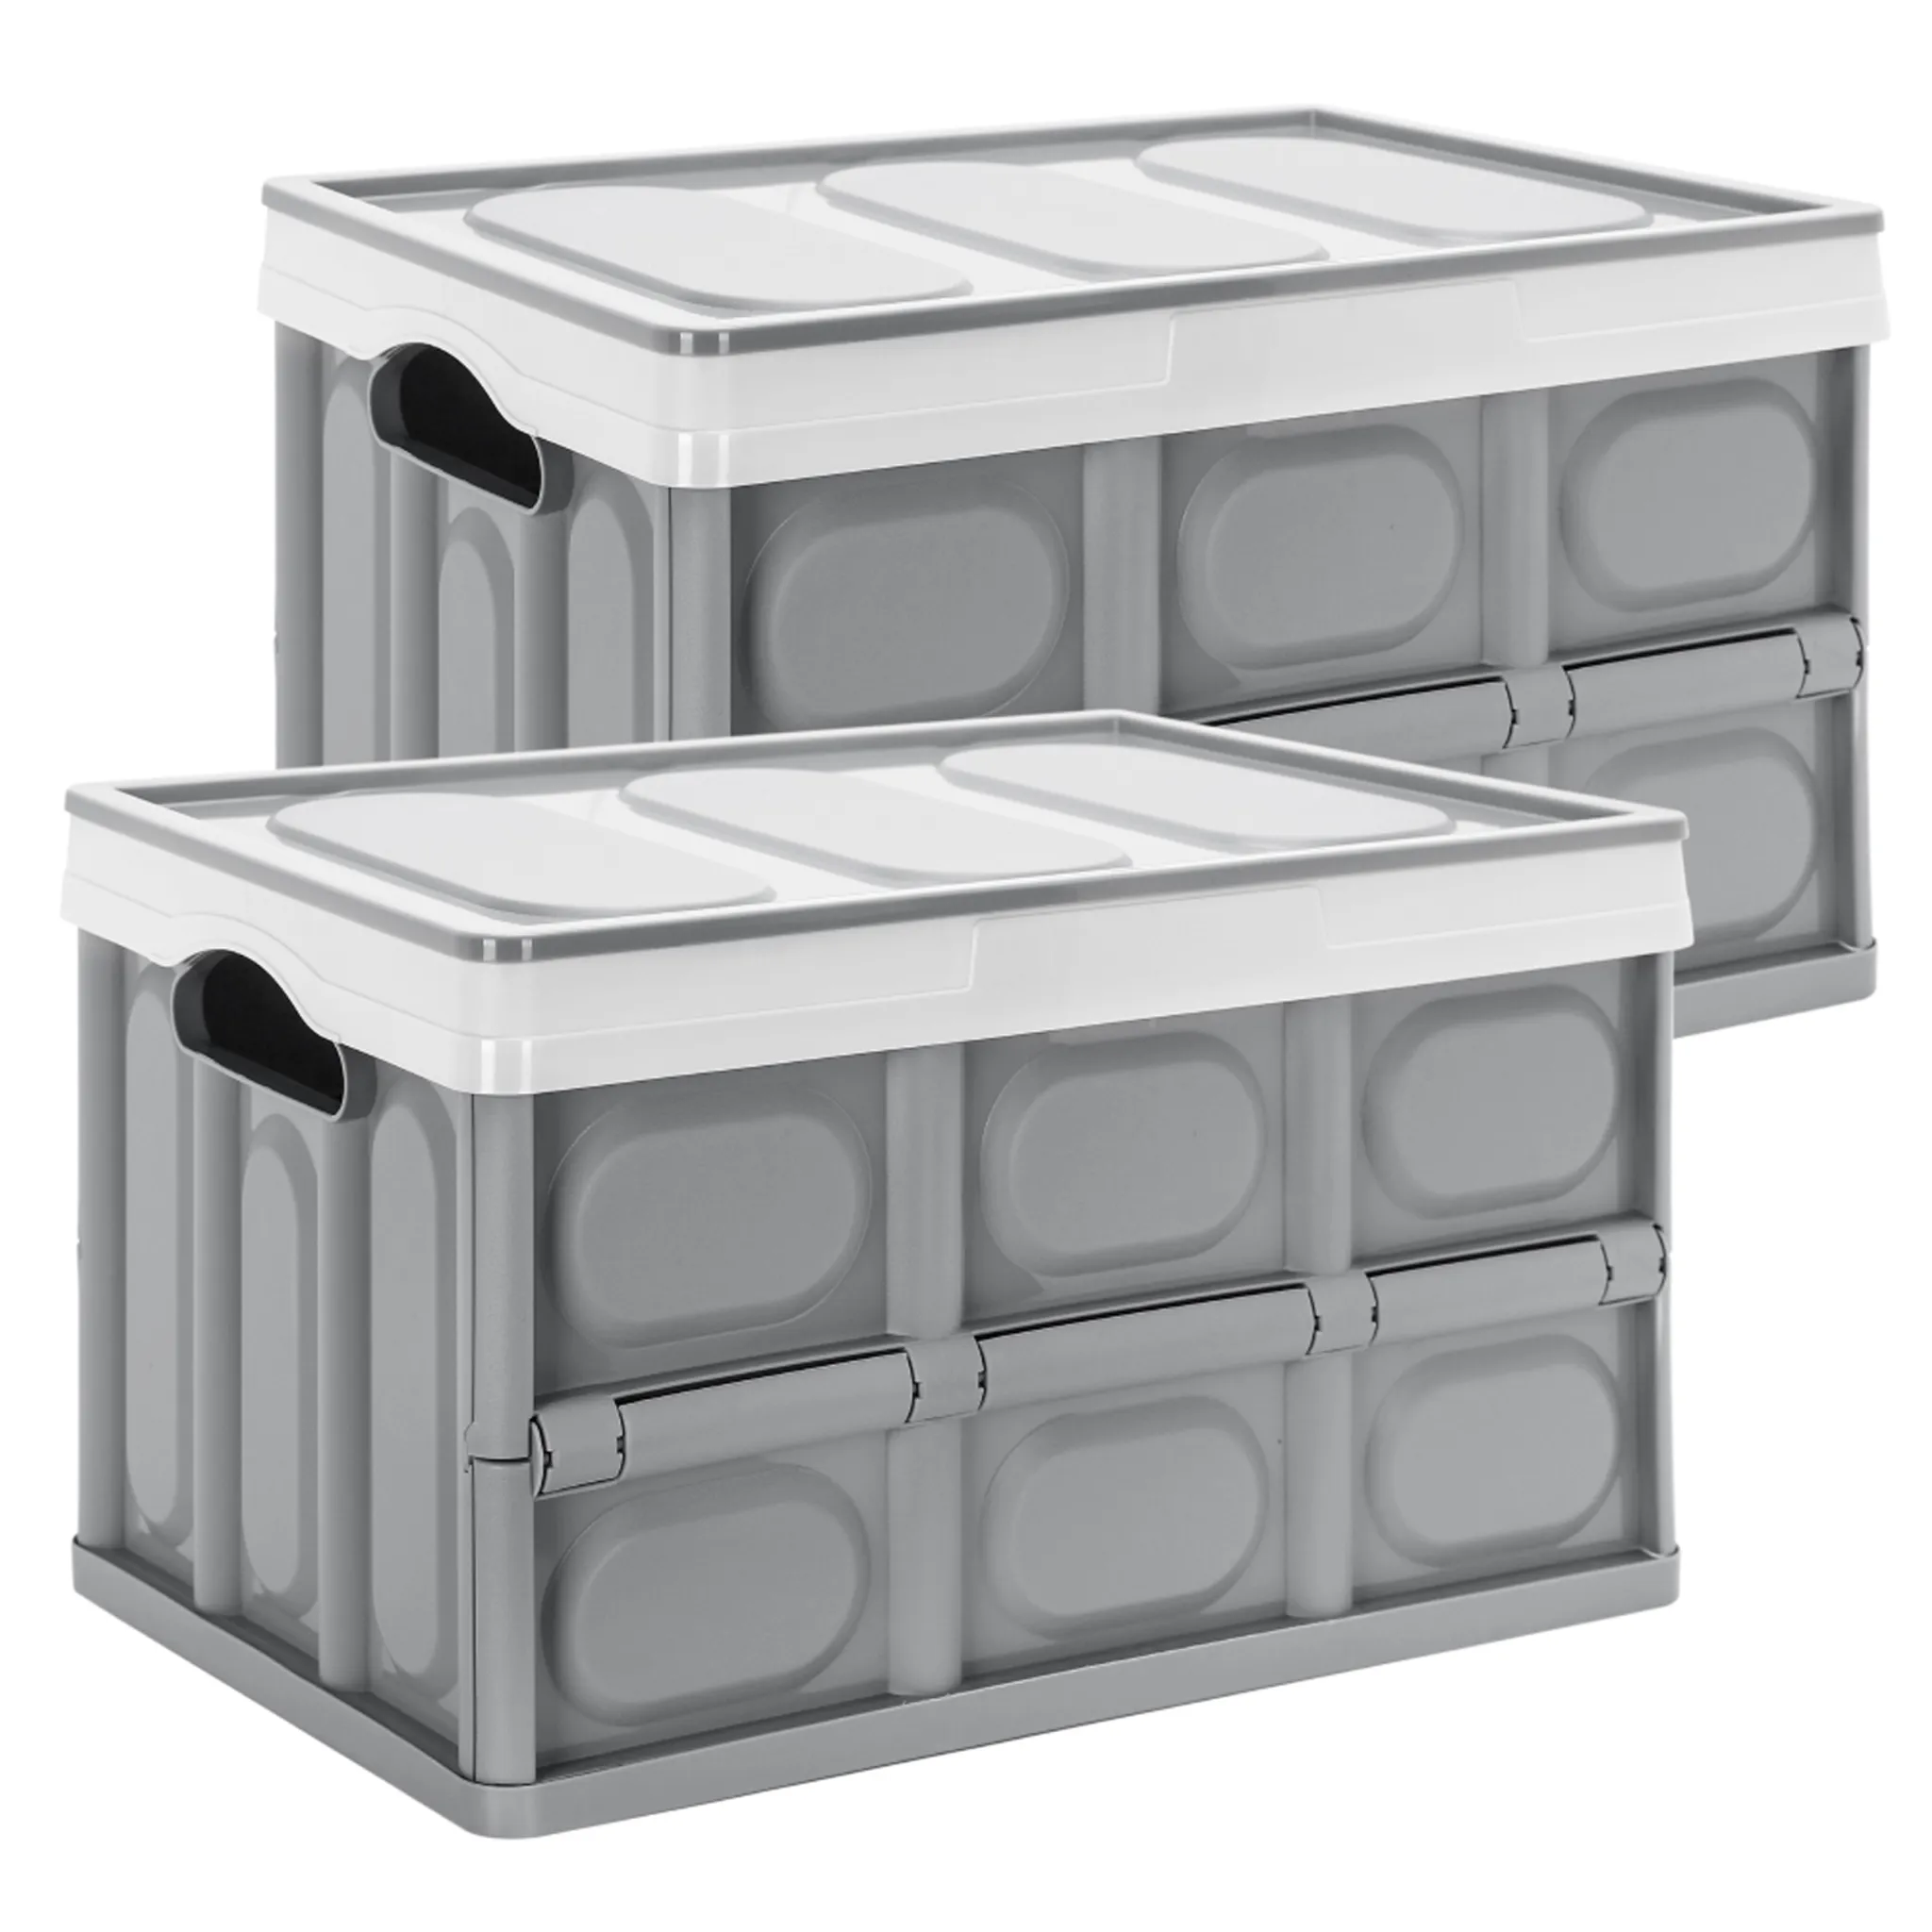 NCRGB 4 Klappbox,24cm Boxen aufbewahrung,Klappboxen Faltbar Stabil